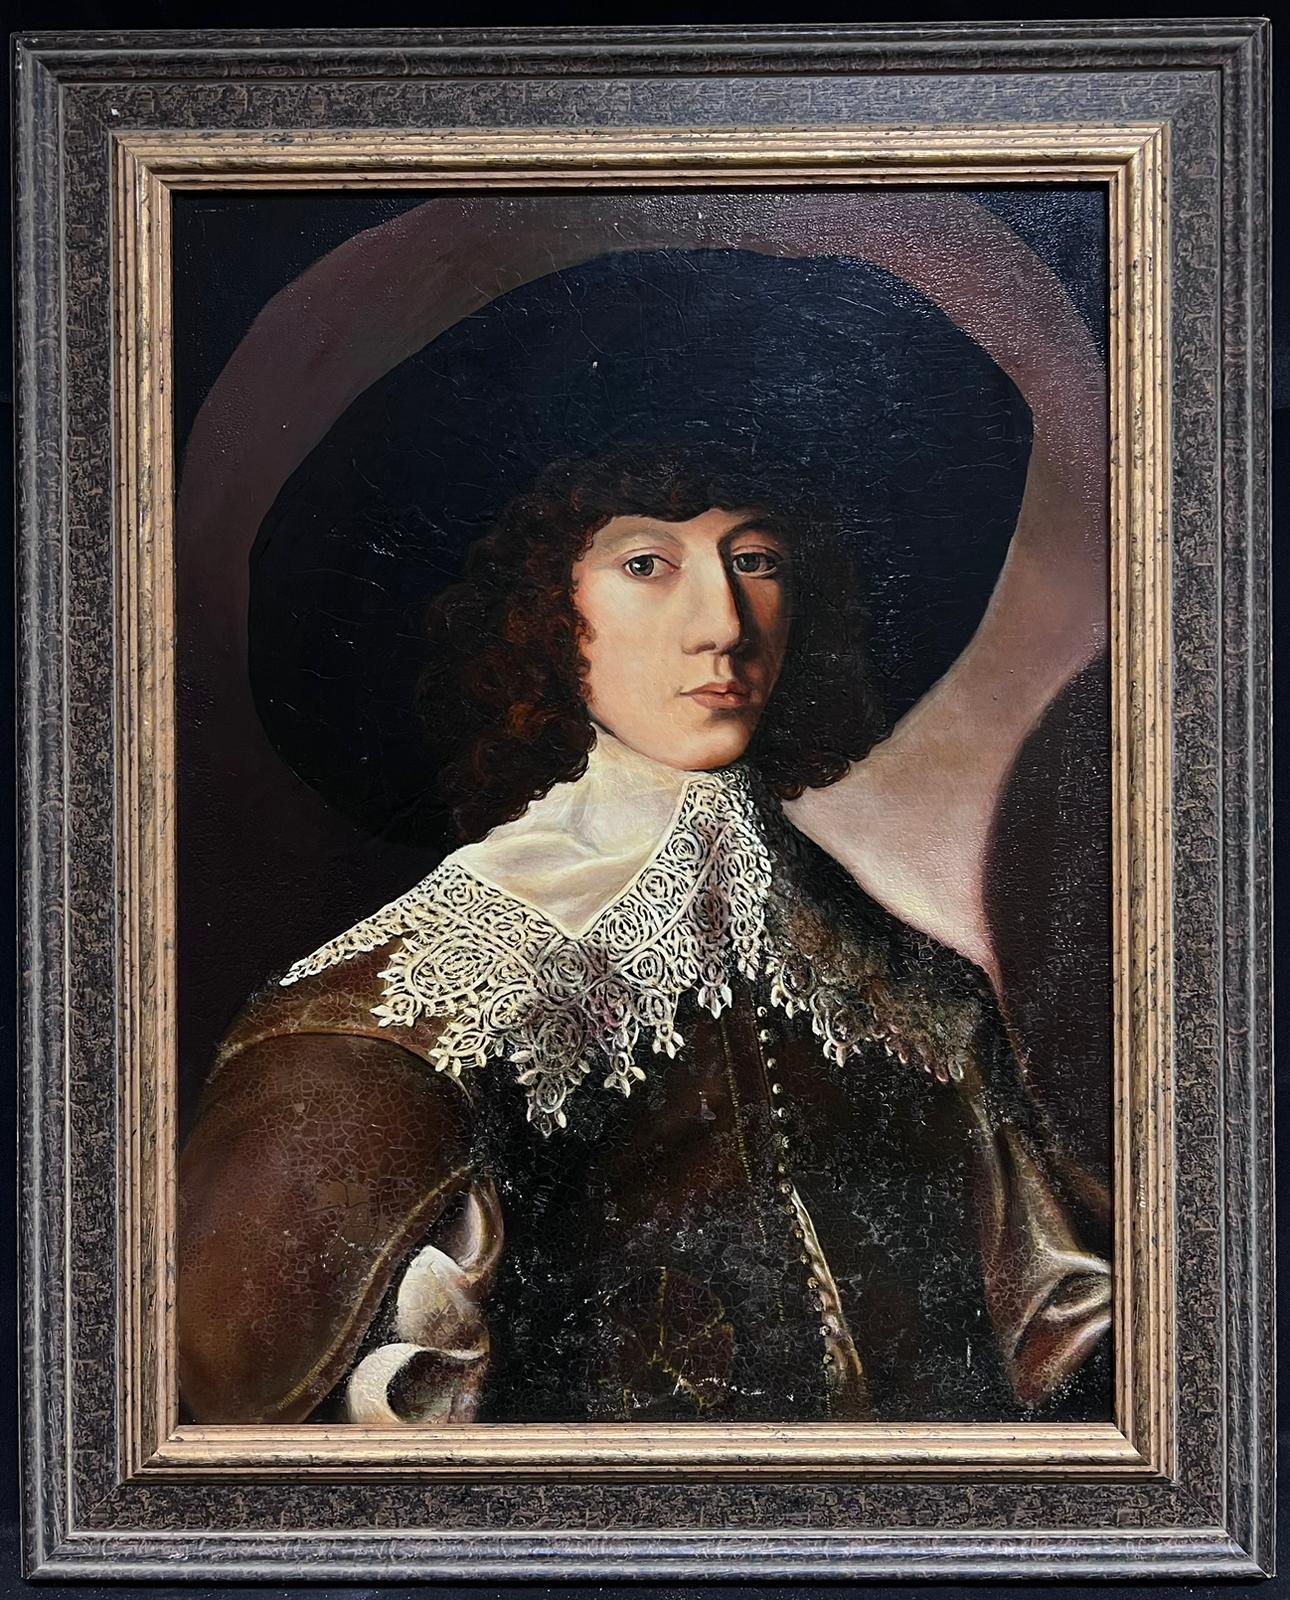 17th century portrait